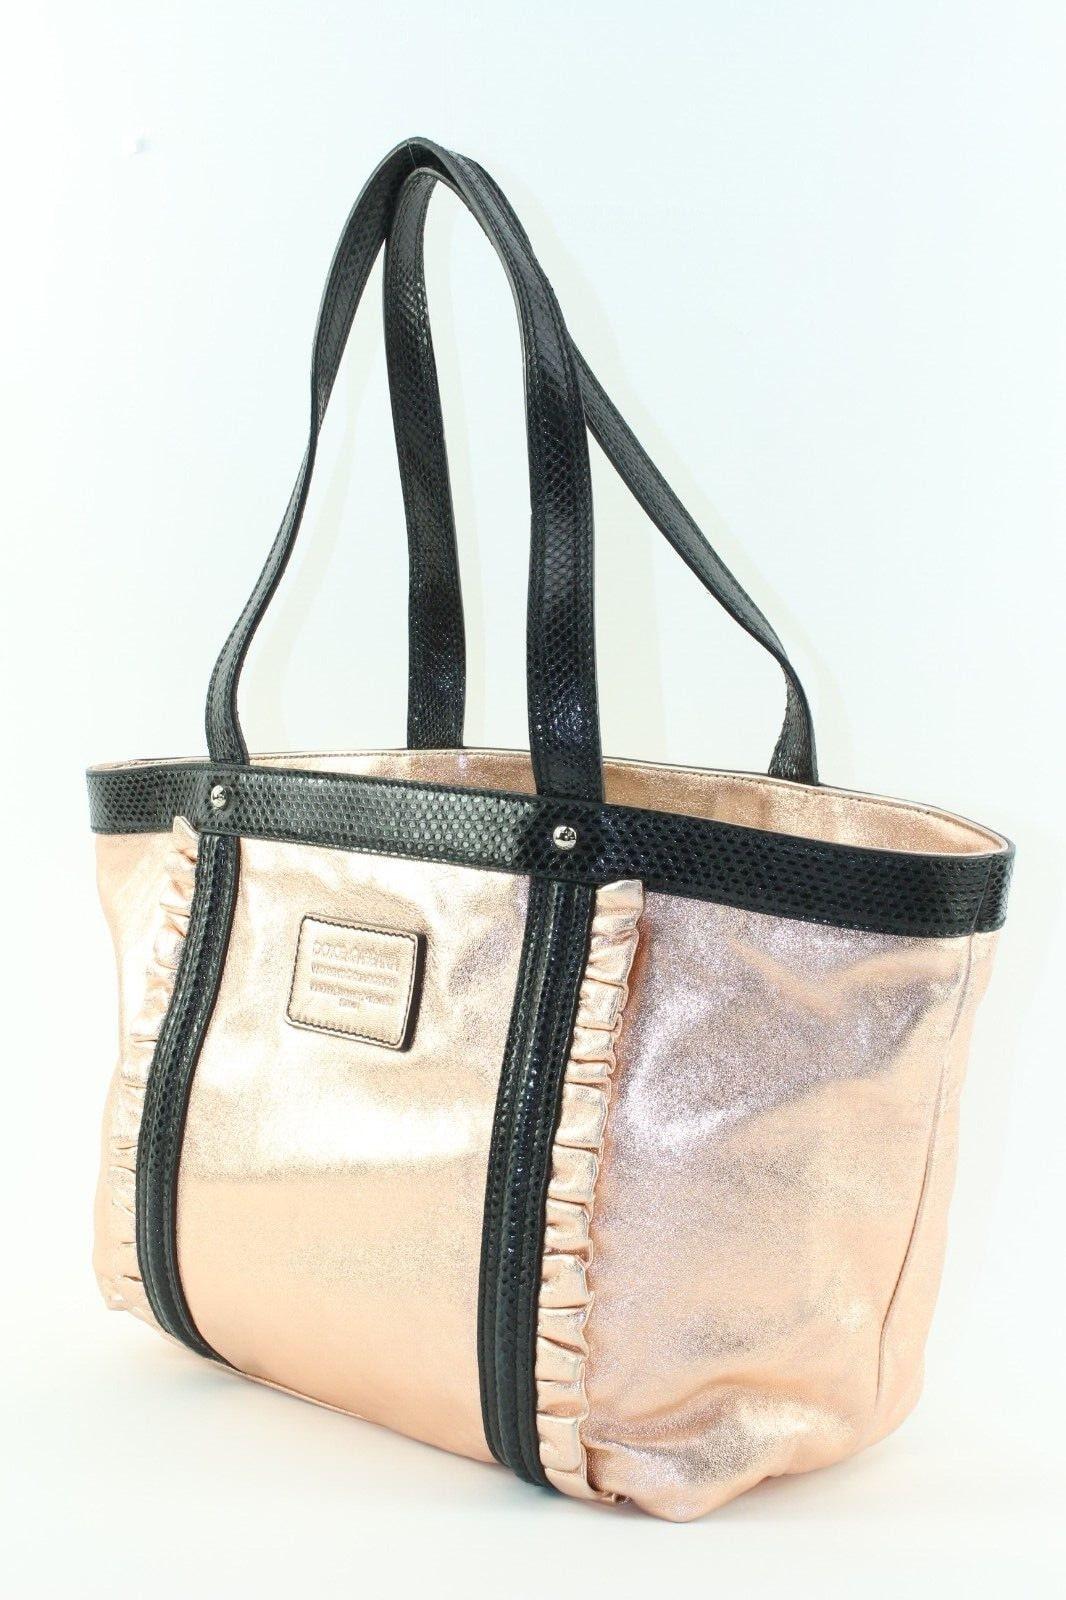 DOLCE & GABBANA Rose Gold Metallic Leather Shoulder Bag 4DG1226K In Excellent Condition For Sale In Dix hills, NY